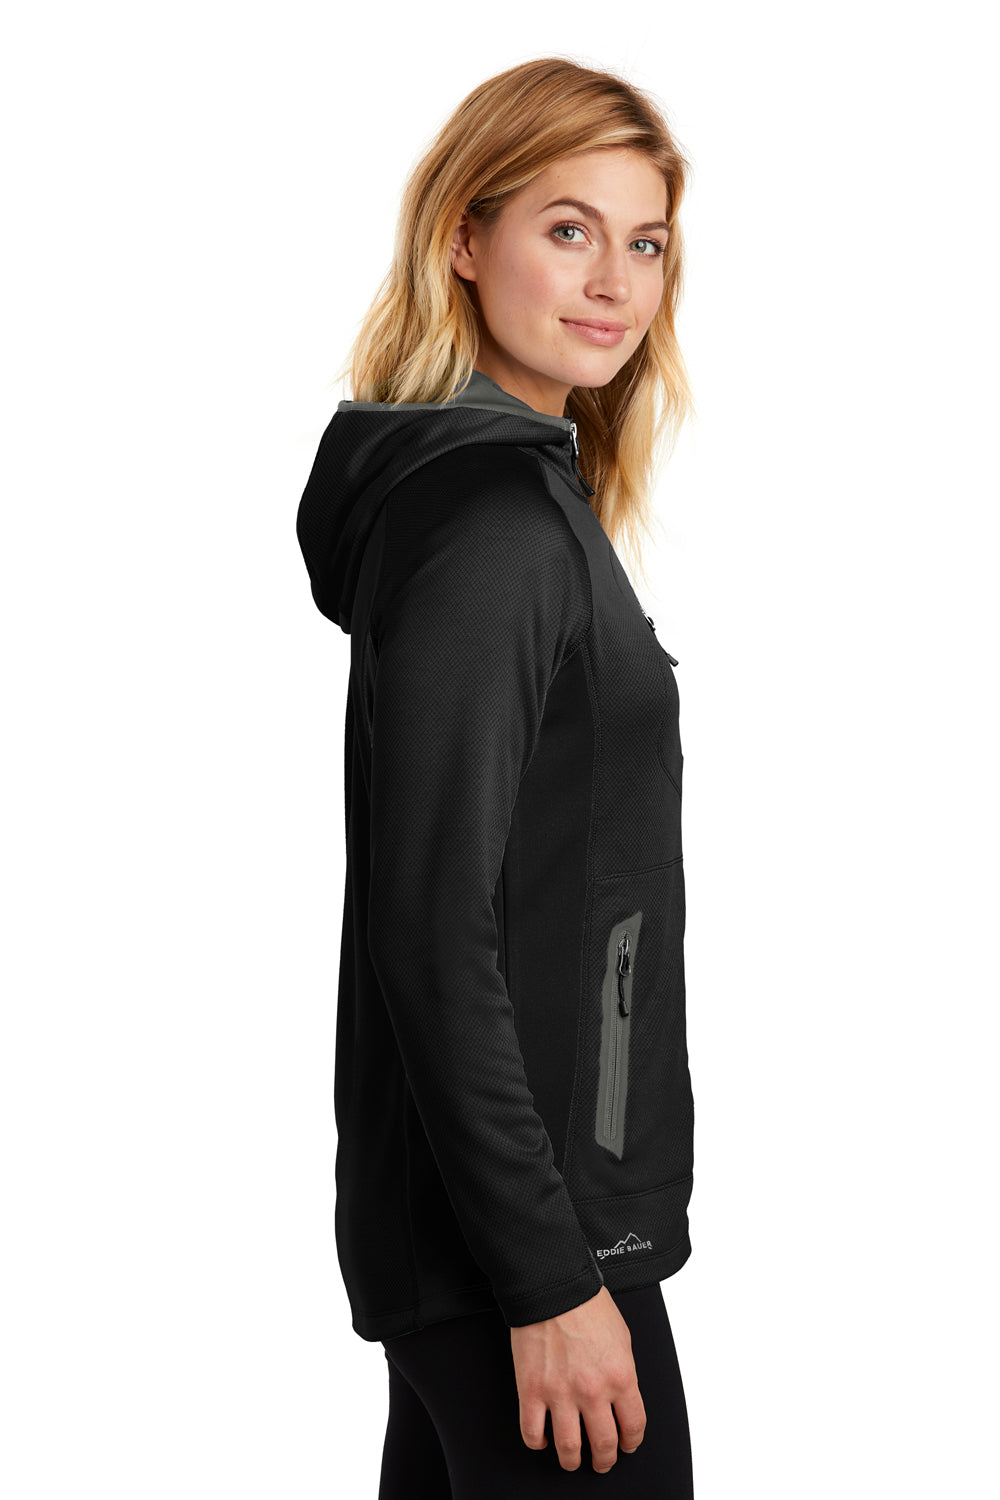 Eddie Bauer Sport Hooded Full-Zip Fleece Jacket, Product